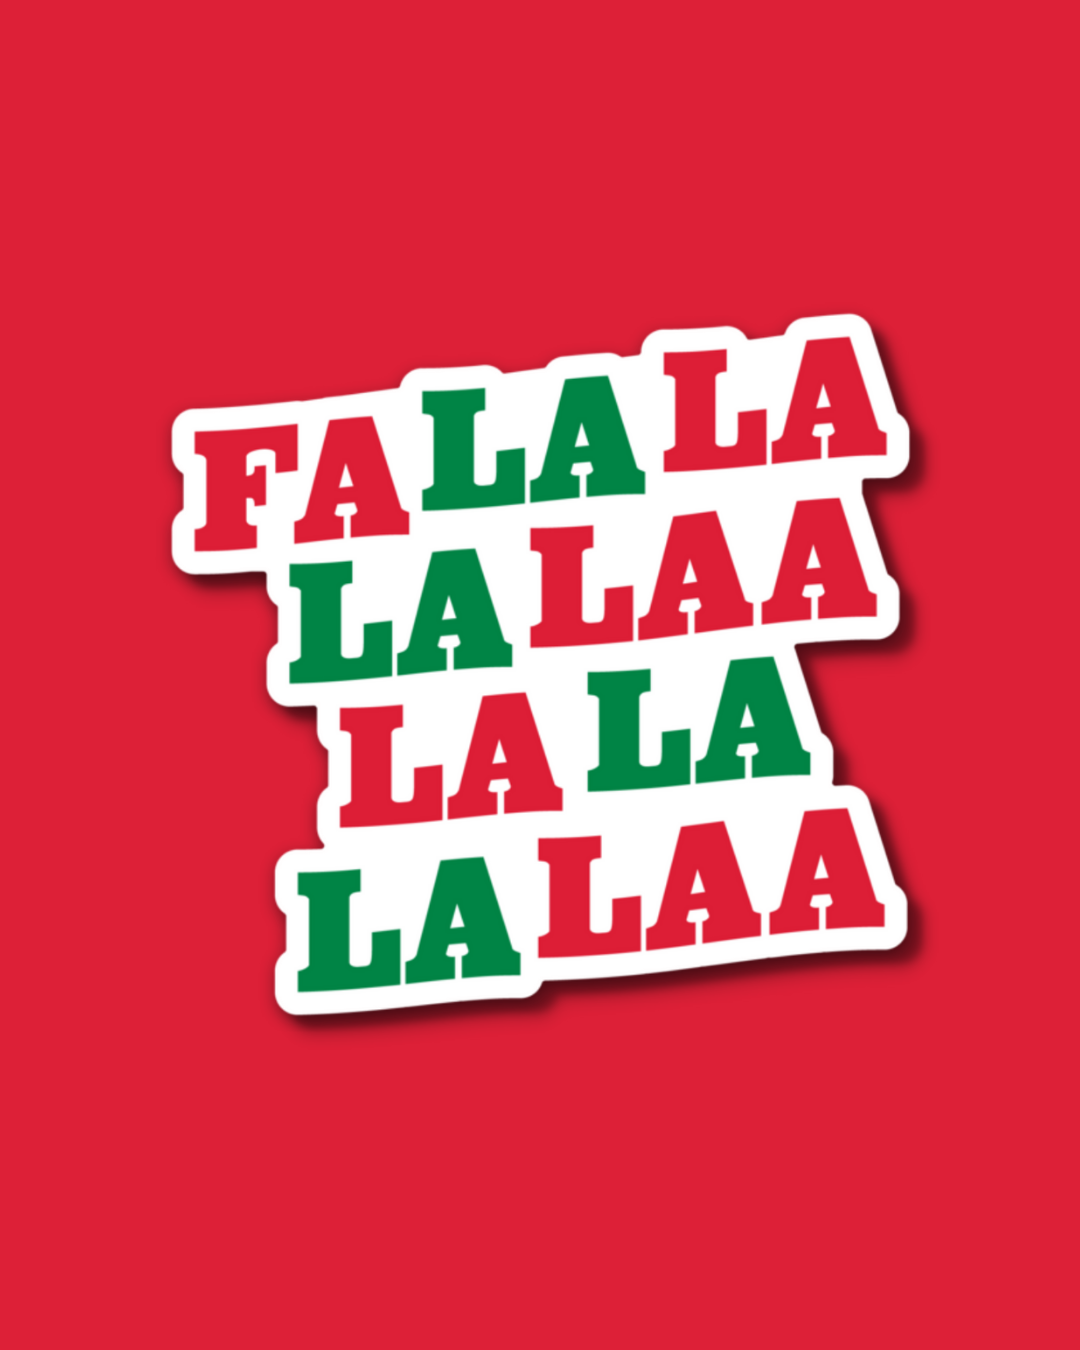 FaLaLa Sticker